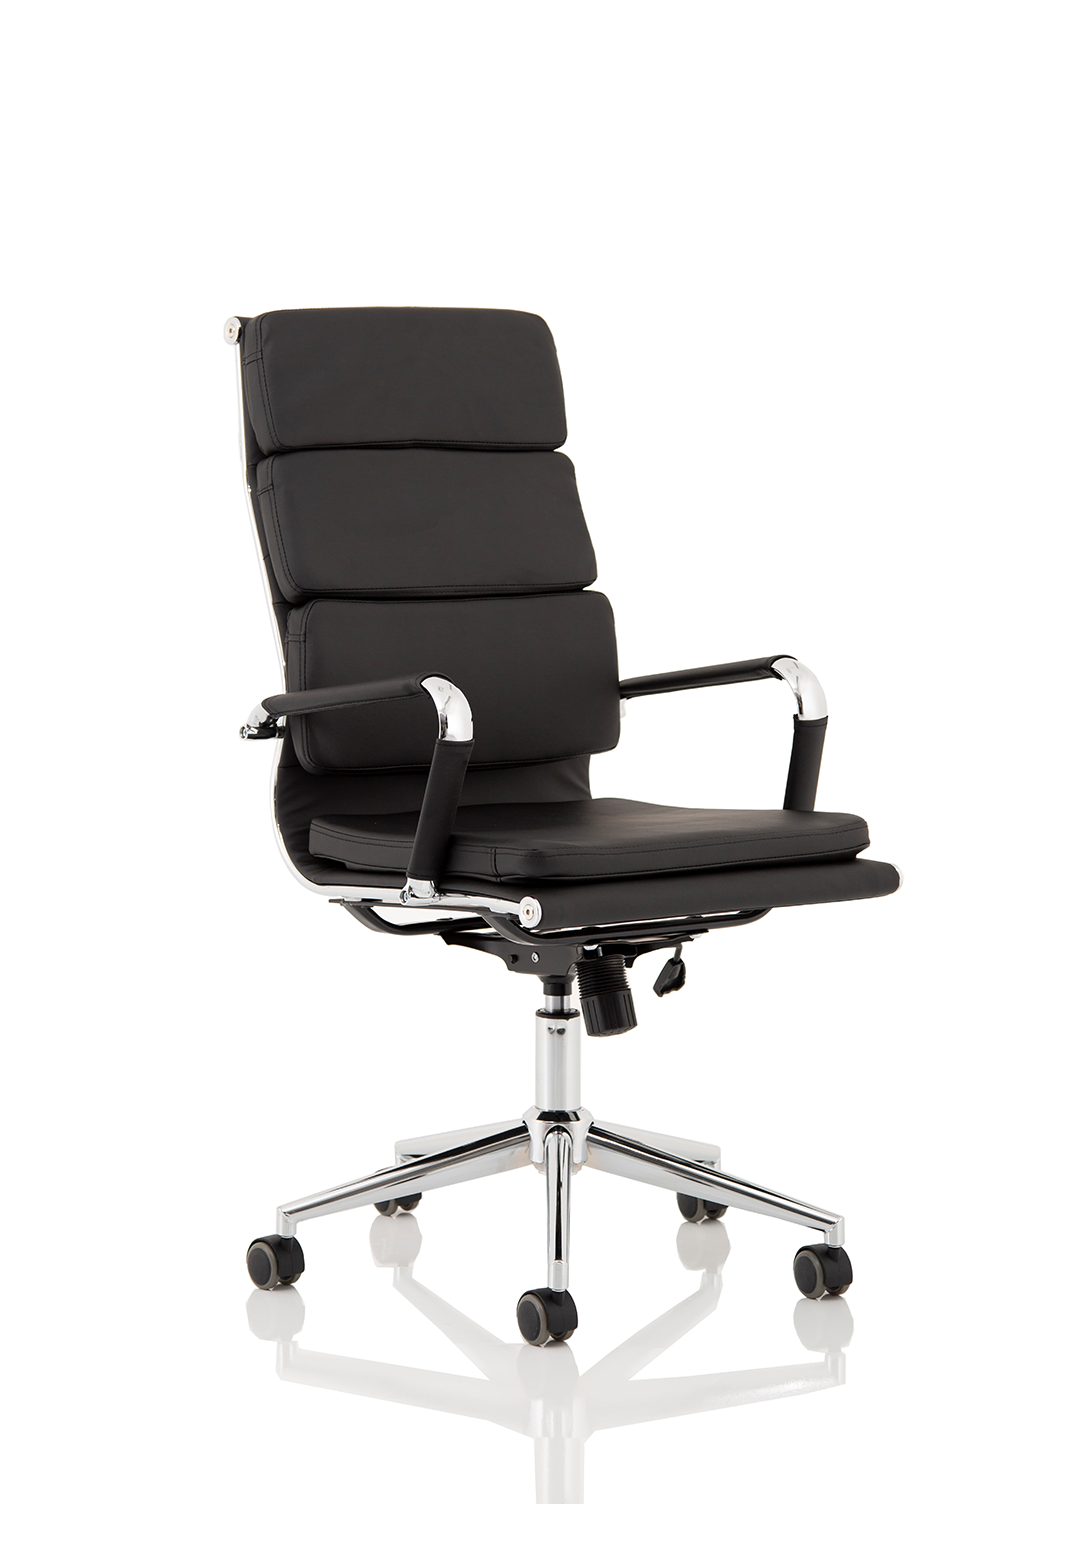 Hawkes Exec Home Office Chair | Executive Chair | Home Office Furniture | Leather Home Office Chair | Leather Executive Chair | Swivel Chair | Swivel Executive Chair 